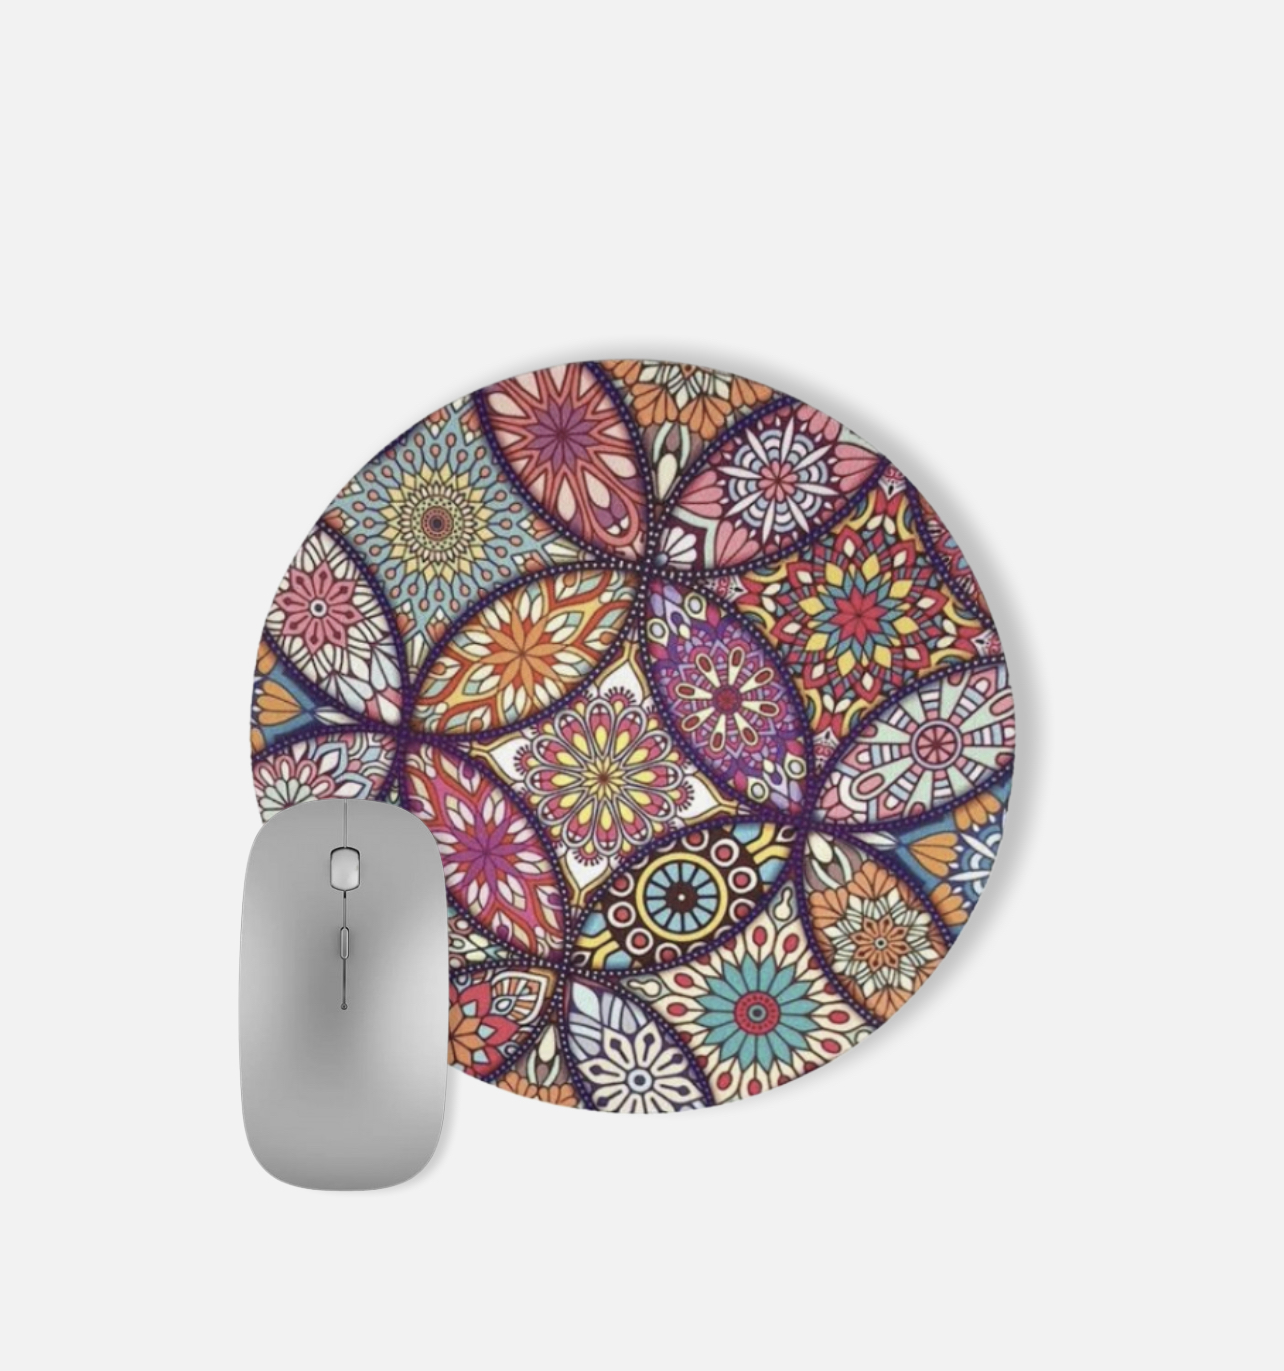 Mandala print Mouse Pad